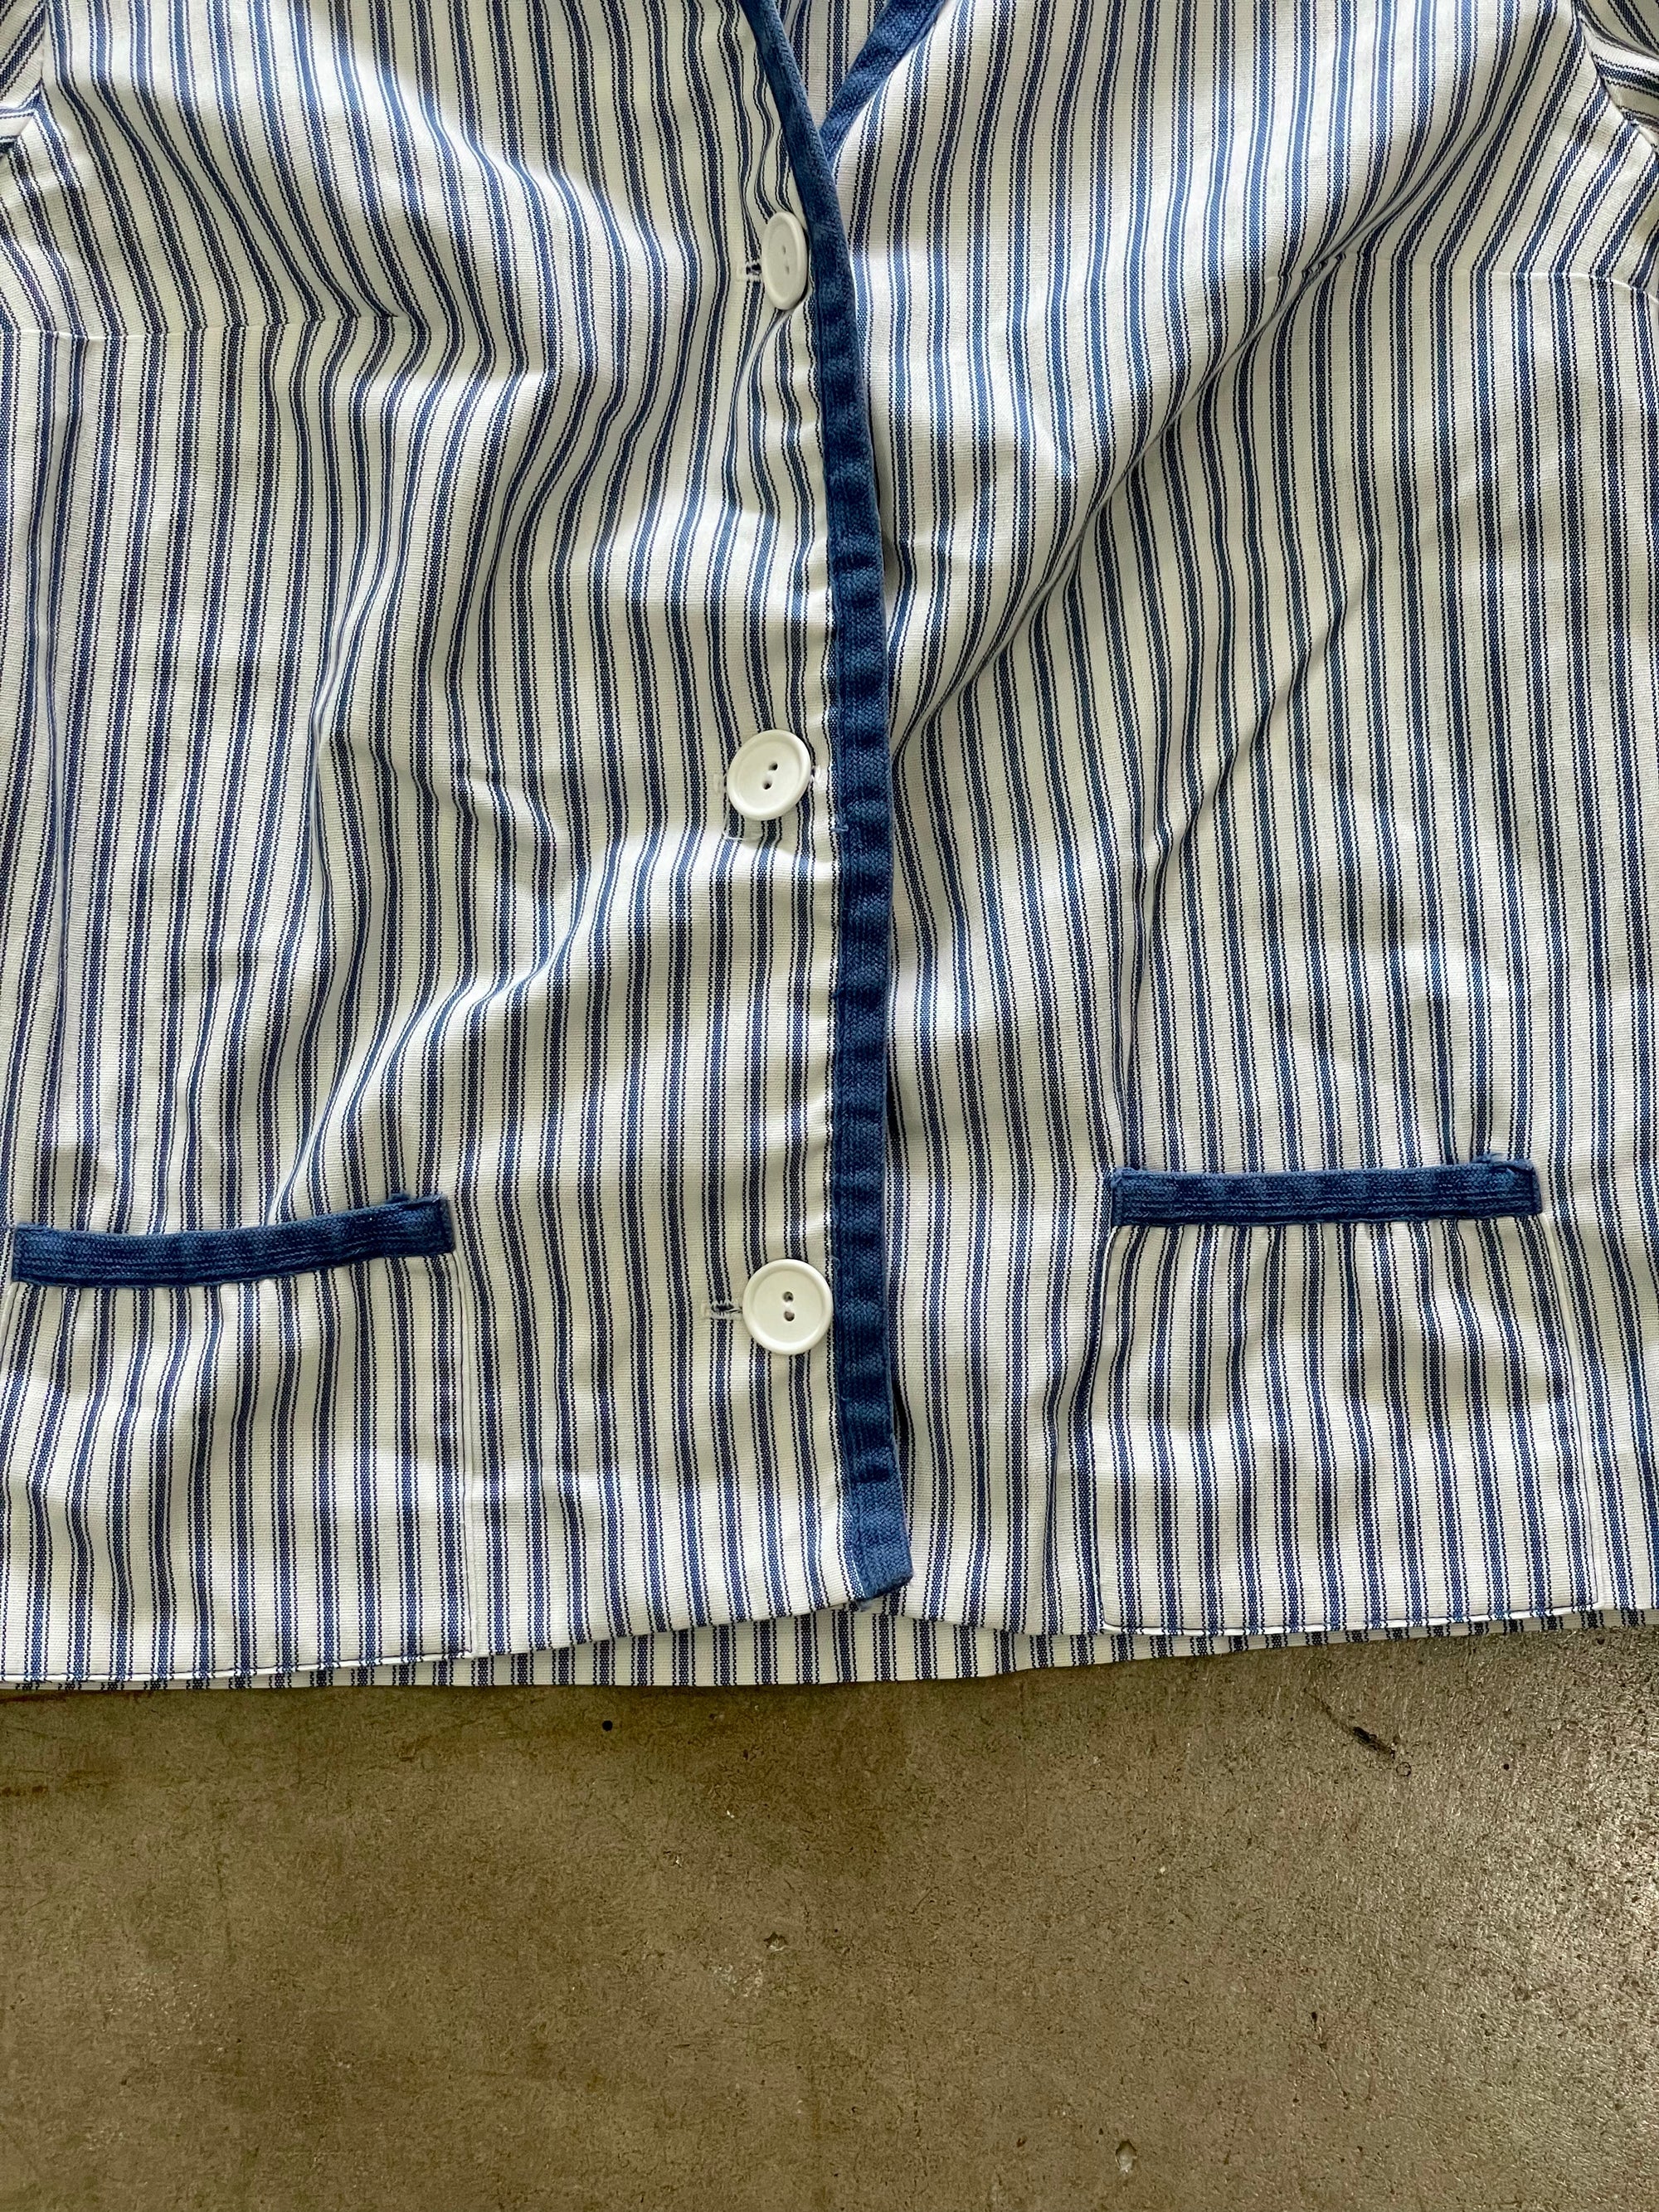 Vintage White & Blue Striped Light Jacket